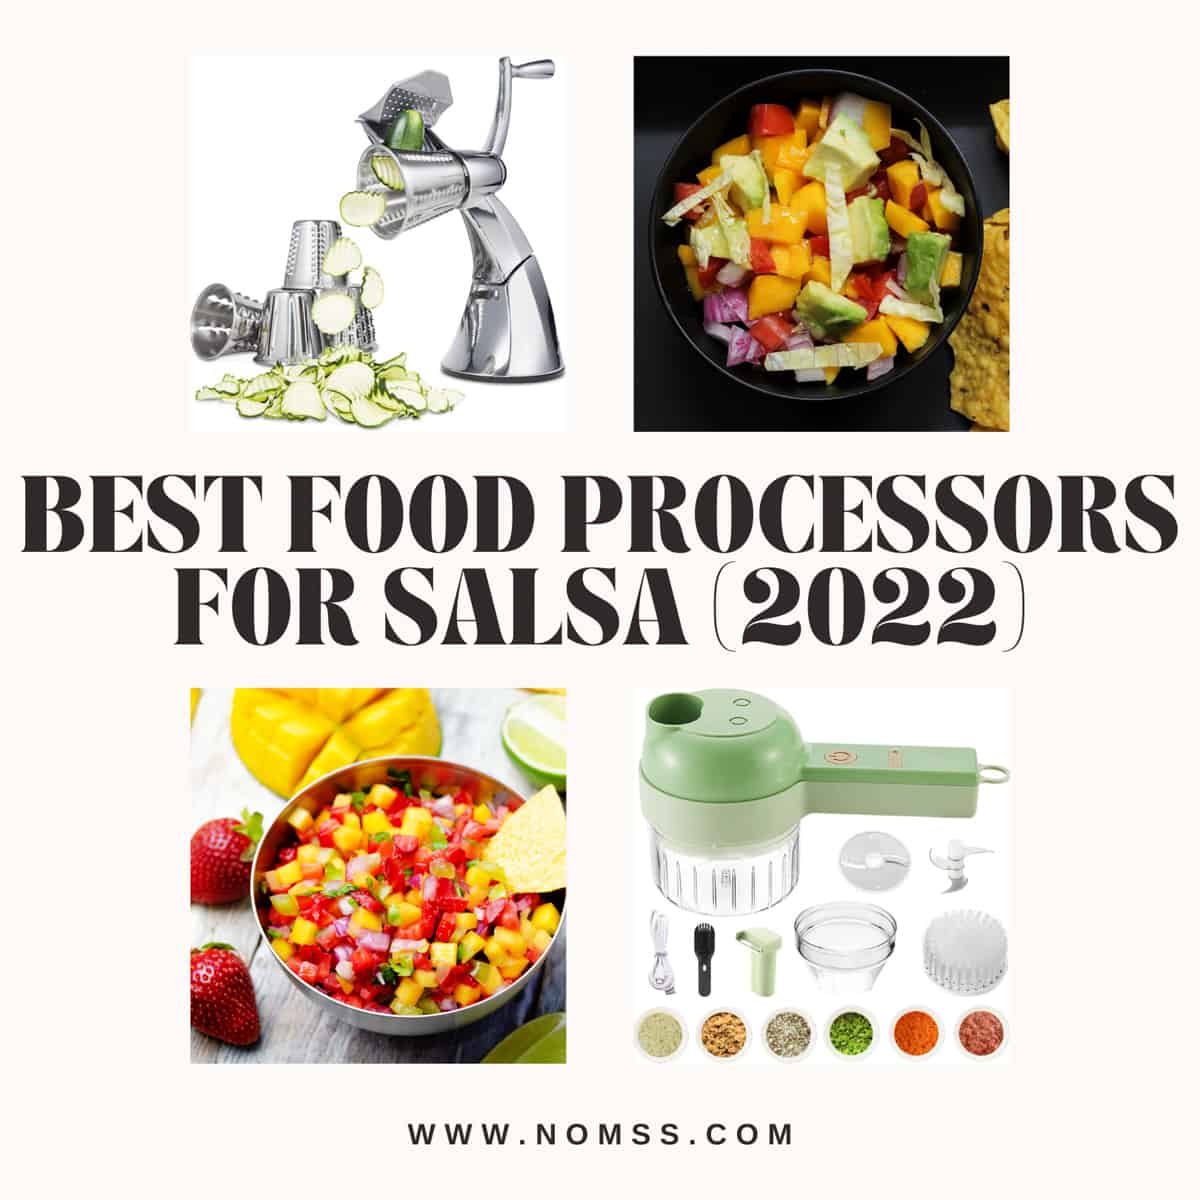 Norpro Mini Food Processor Salsa Maker